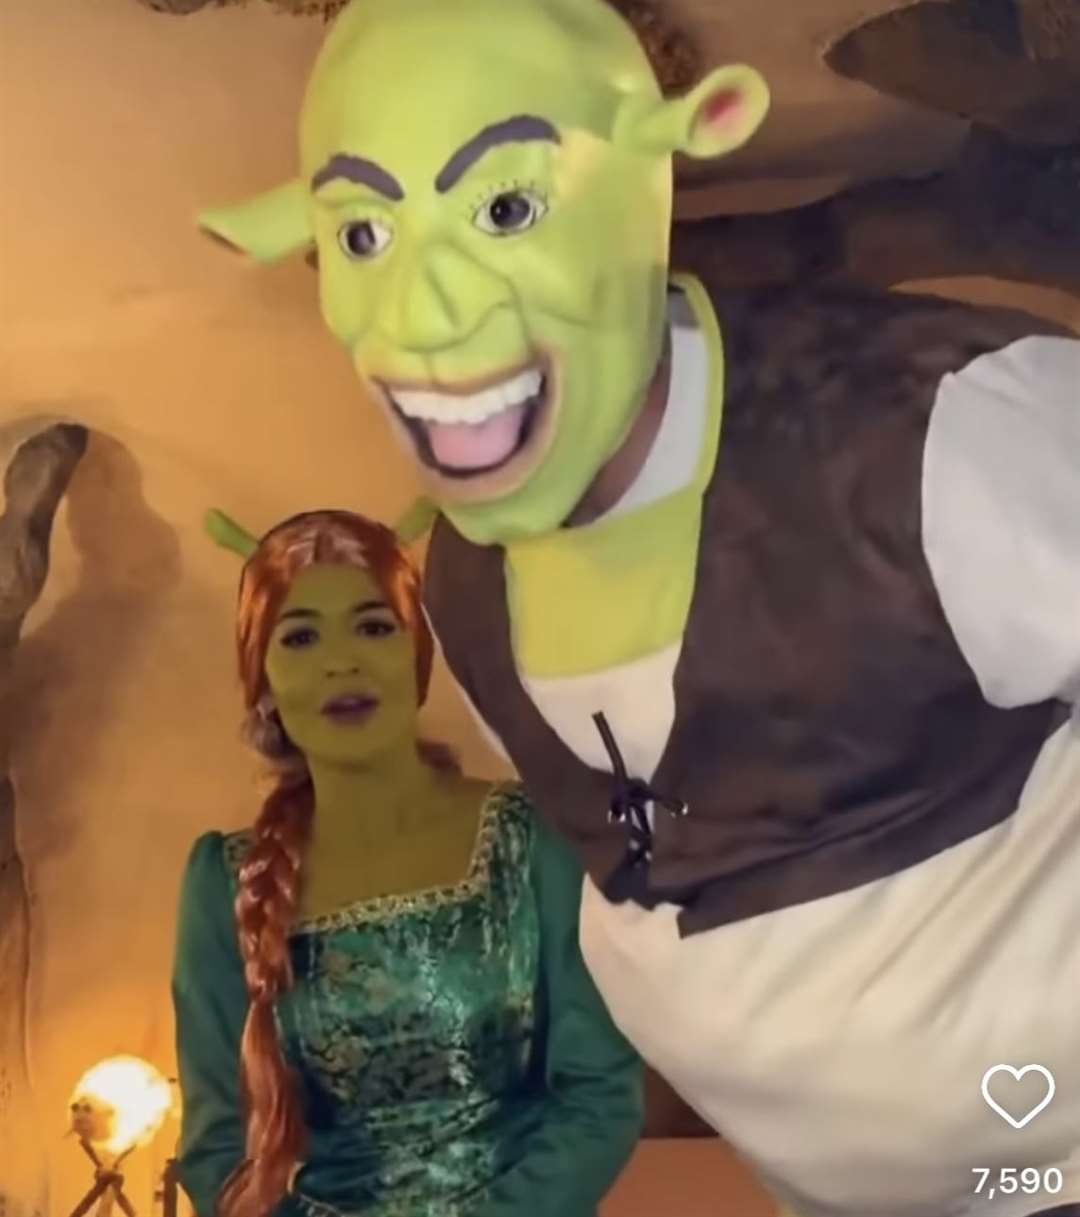 Rita Ora and Taika Waititi in character on their visit to Shrek's swamp.